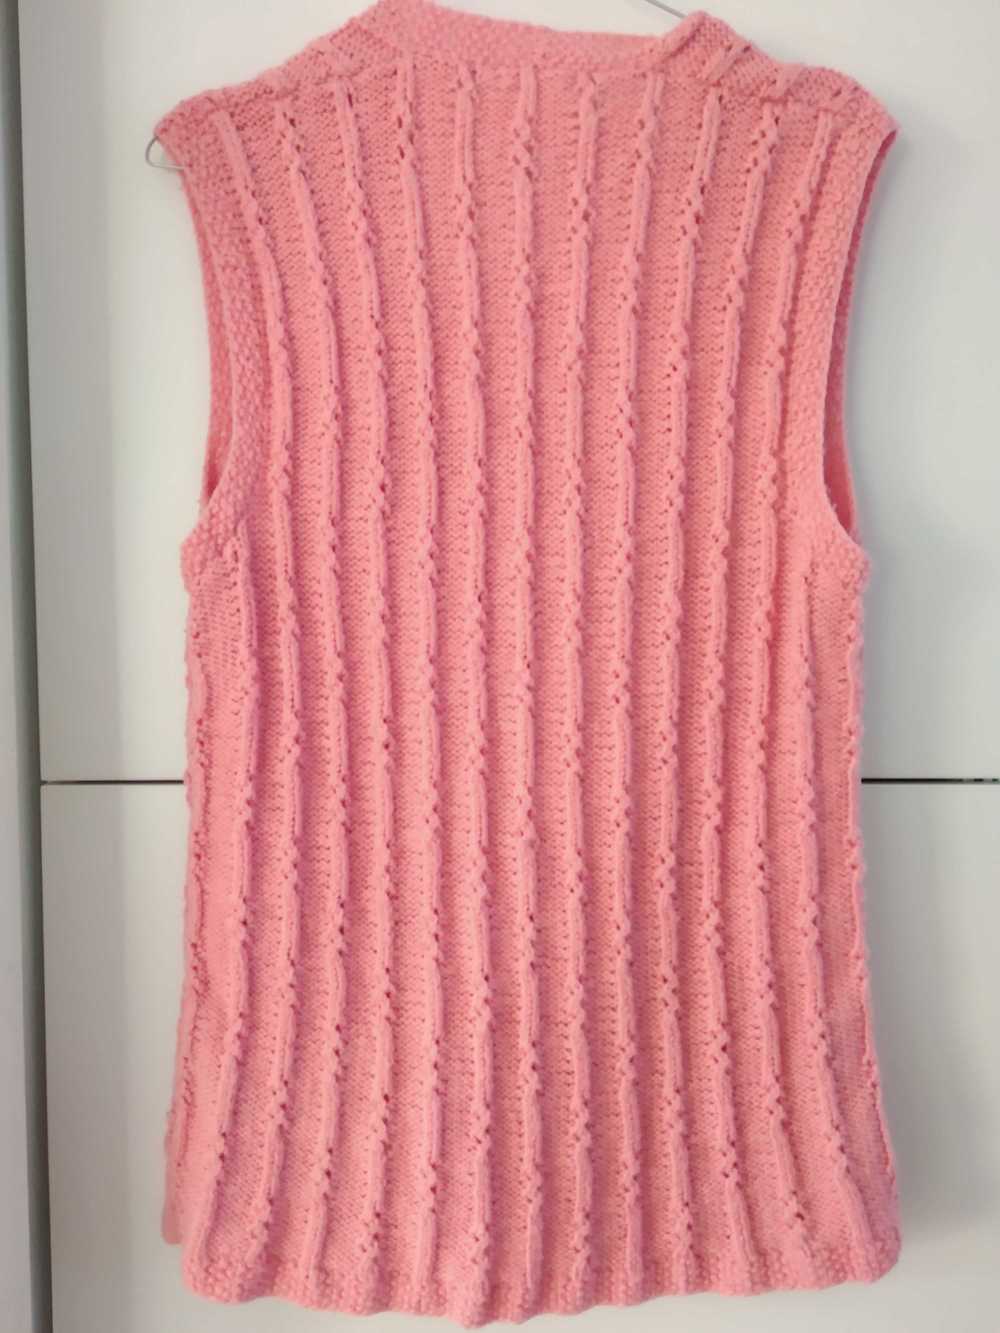 Knit vest - Handmade/ handmade pink sleeveless kn… - image 4